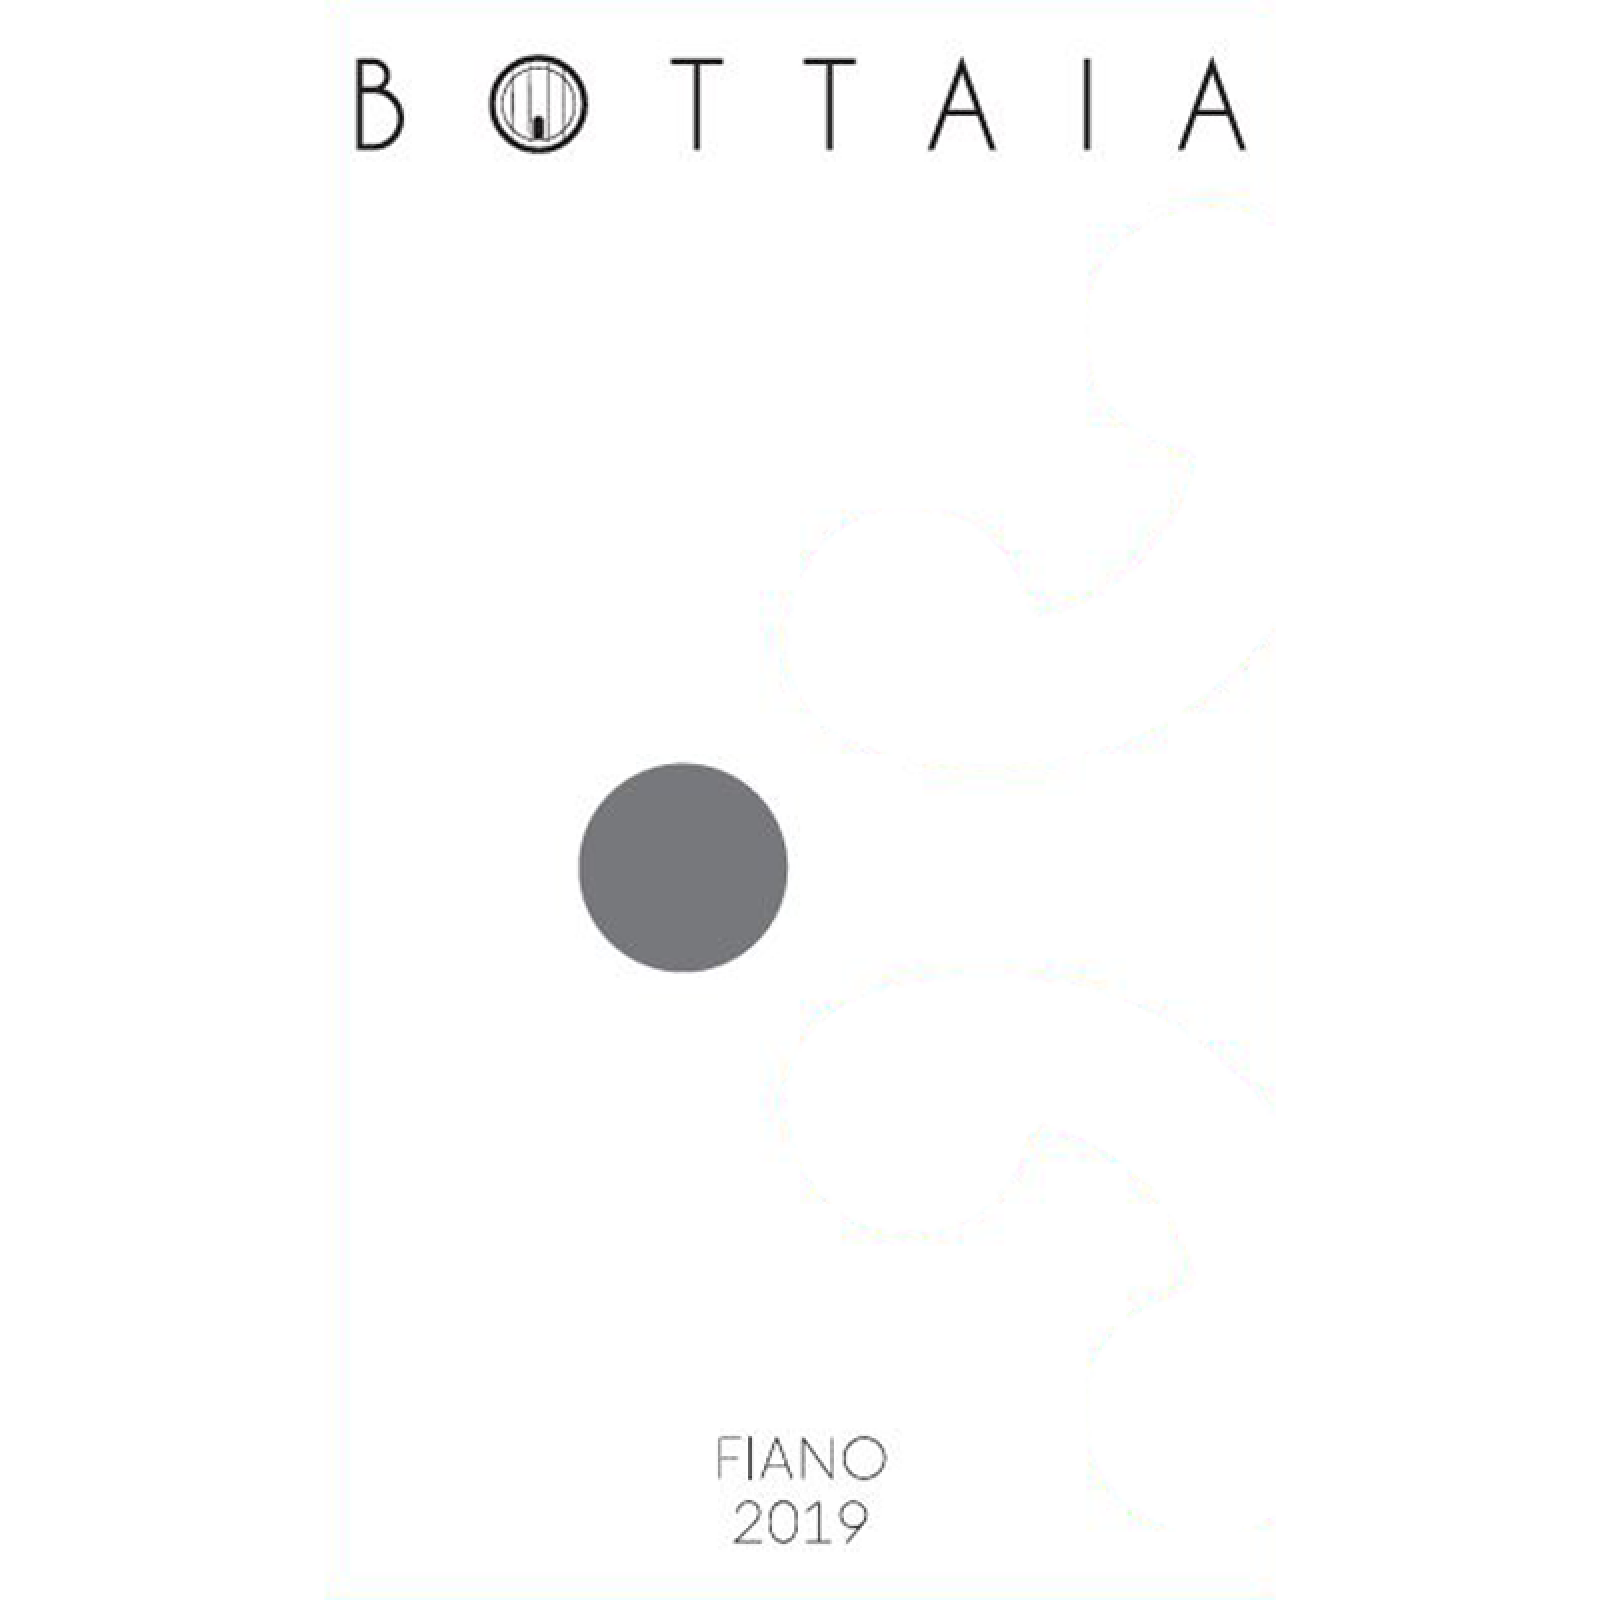 Bottaia Fiano 2019